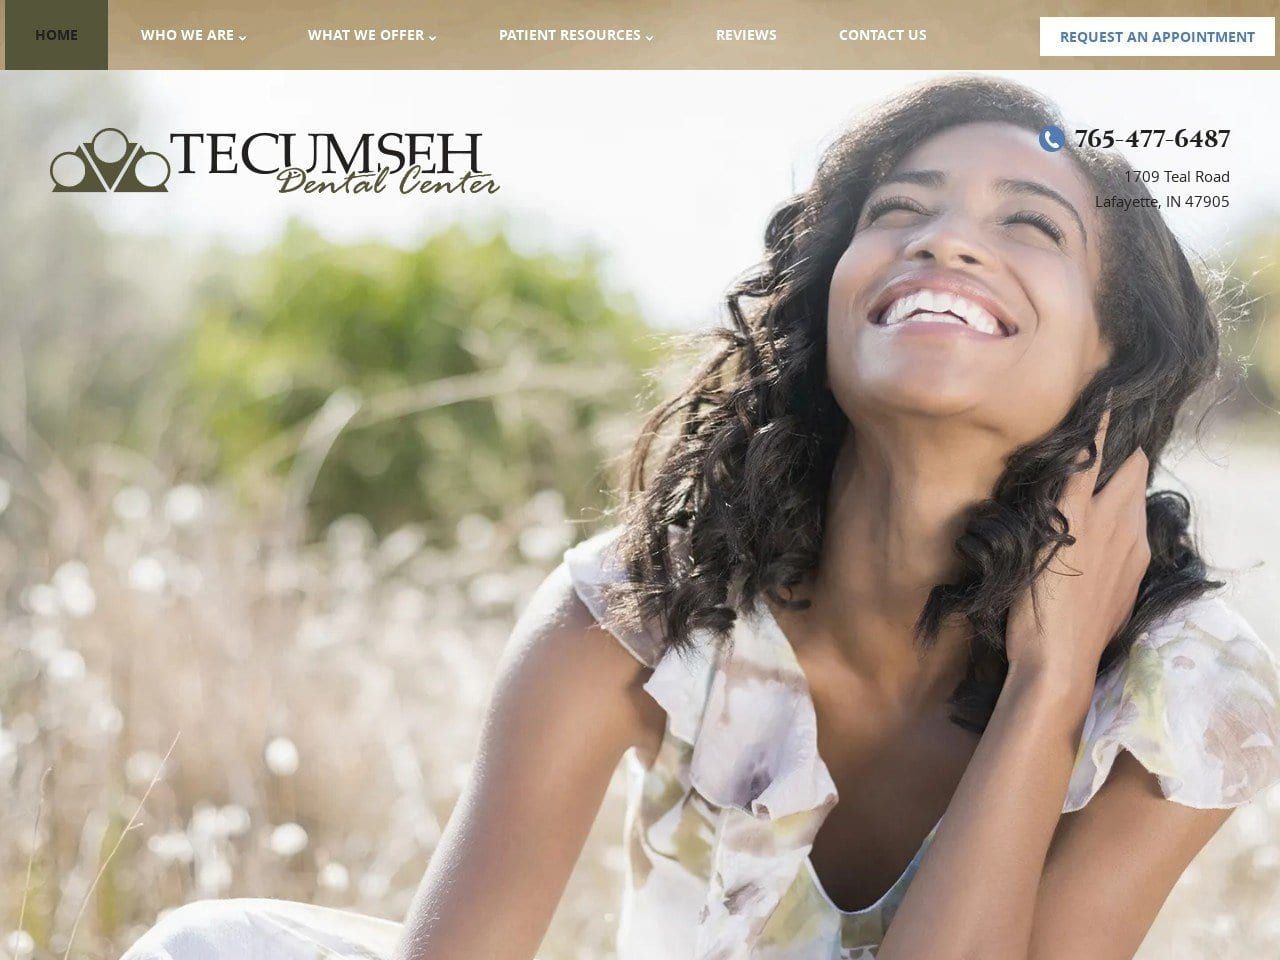 Tecumseh Dental Center Website Screenshot from tecumsehdentalcenter.com